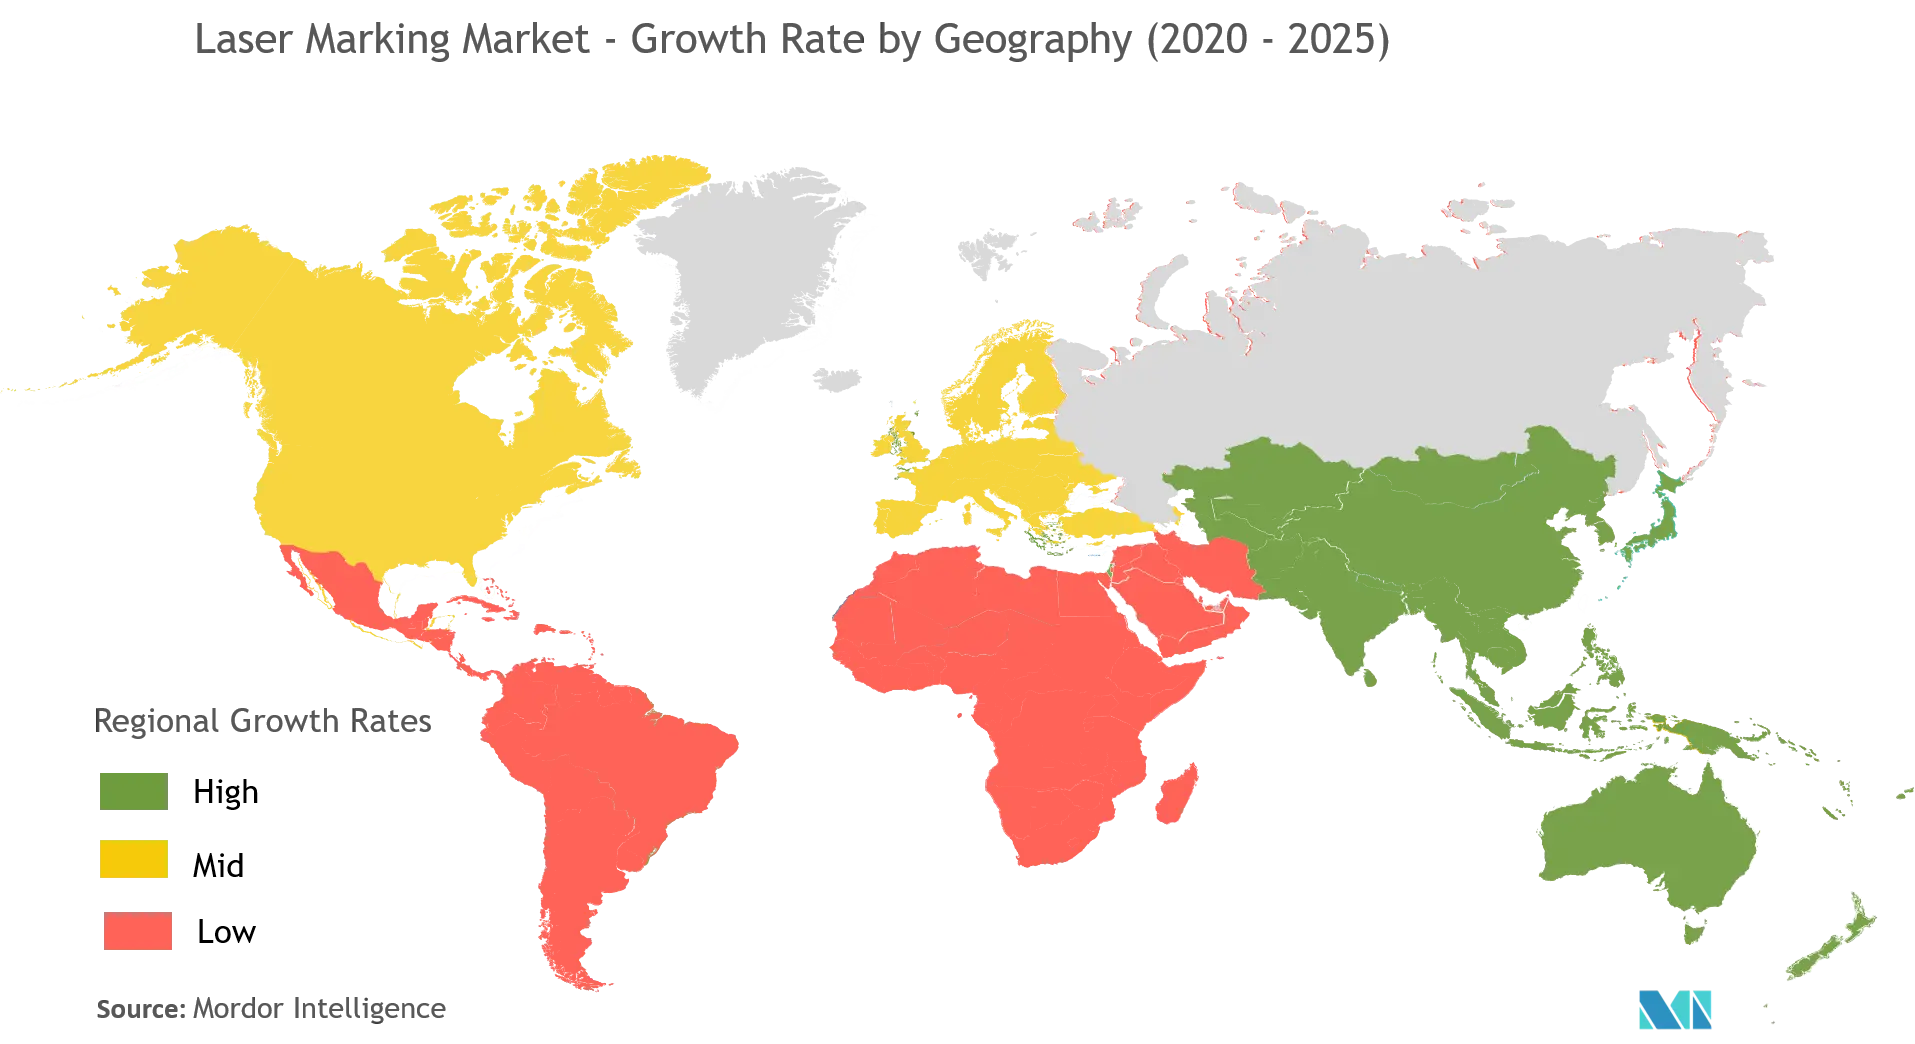  Laser Marking Market Growth by Region